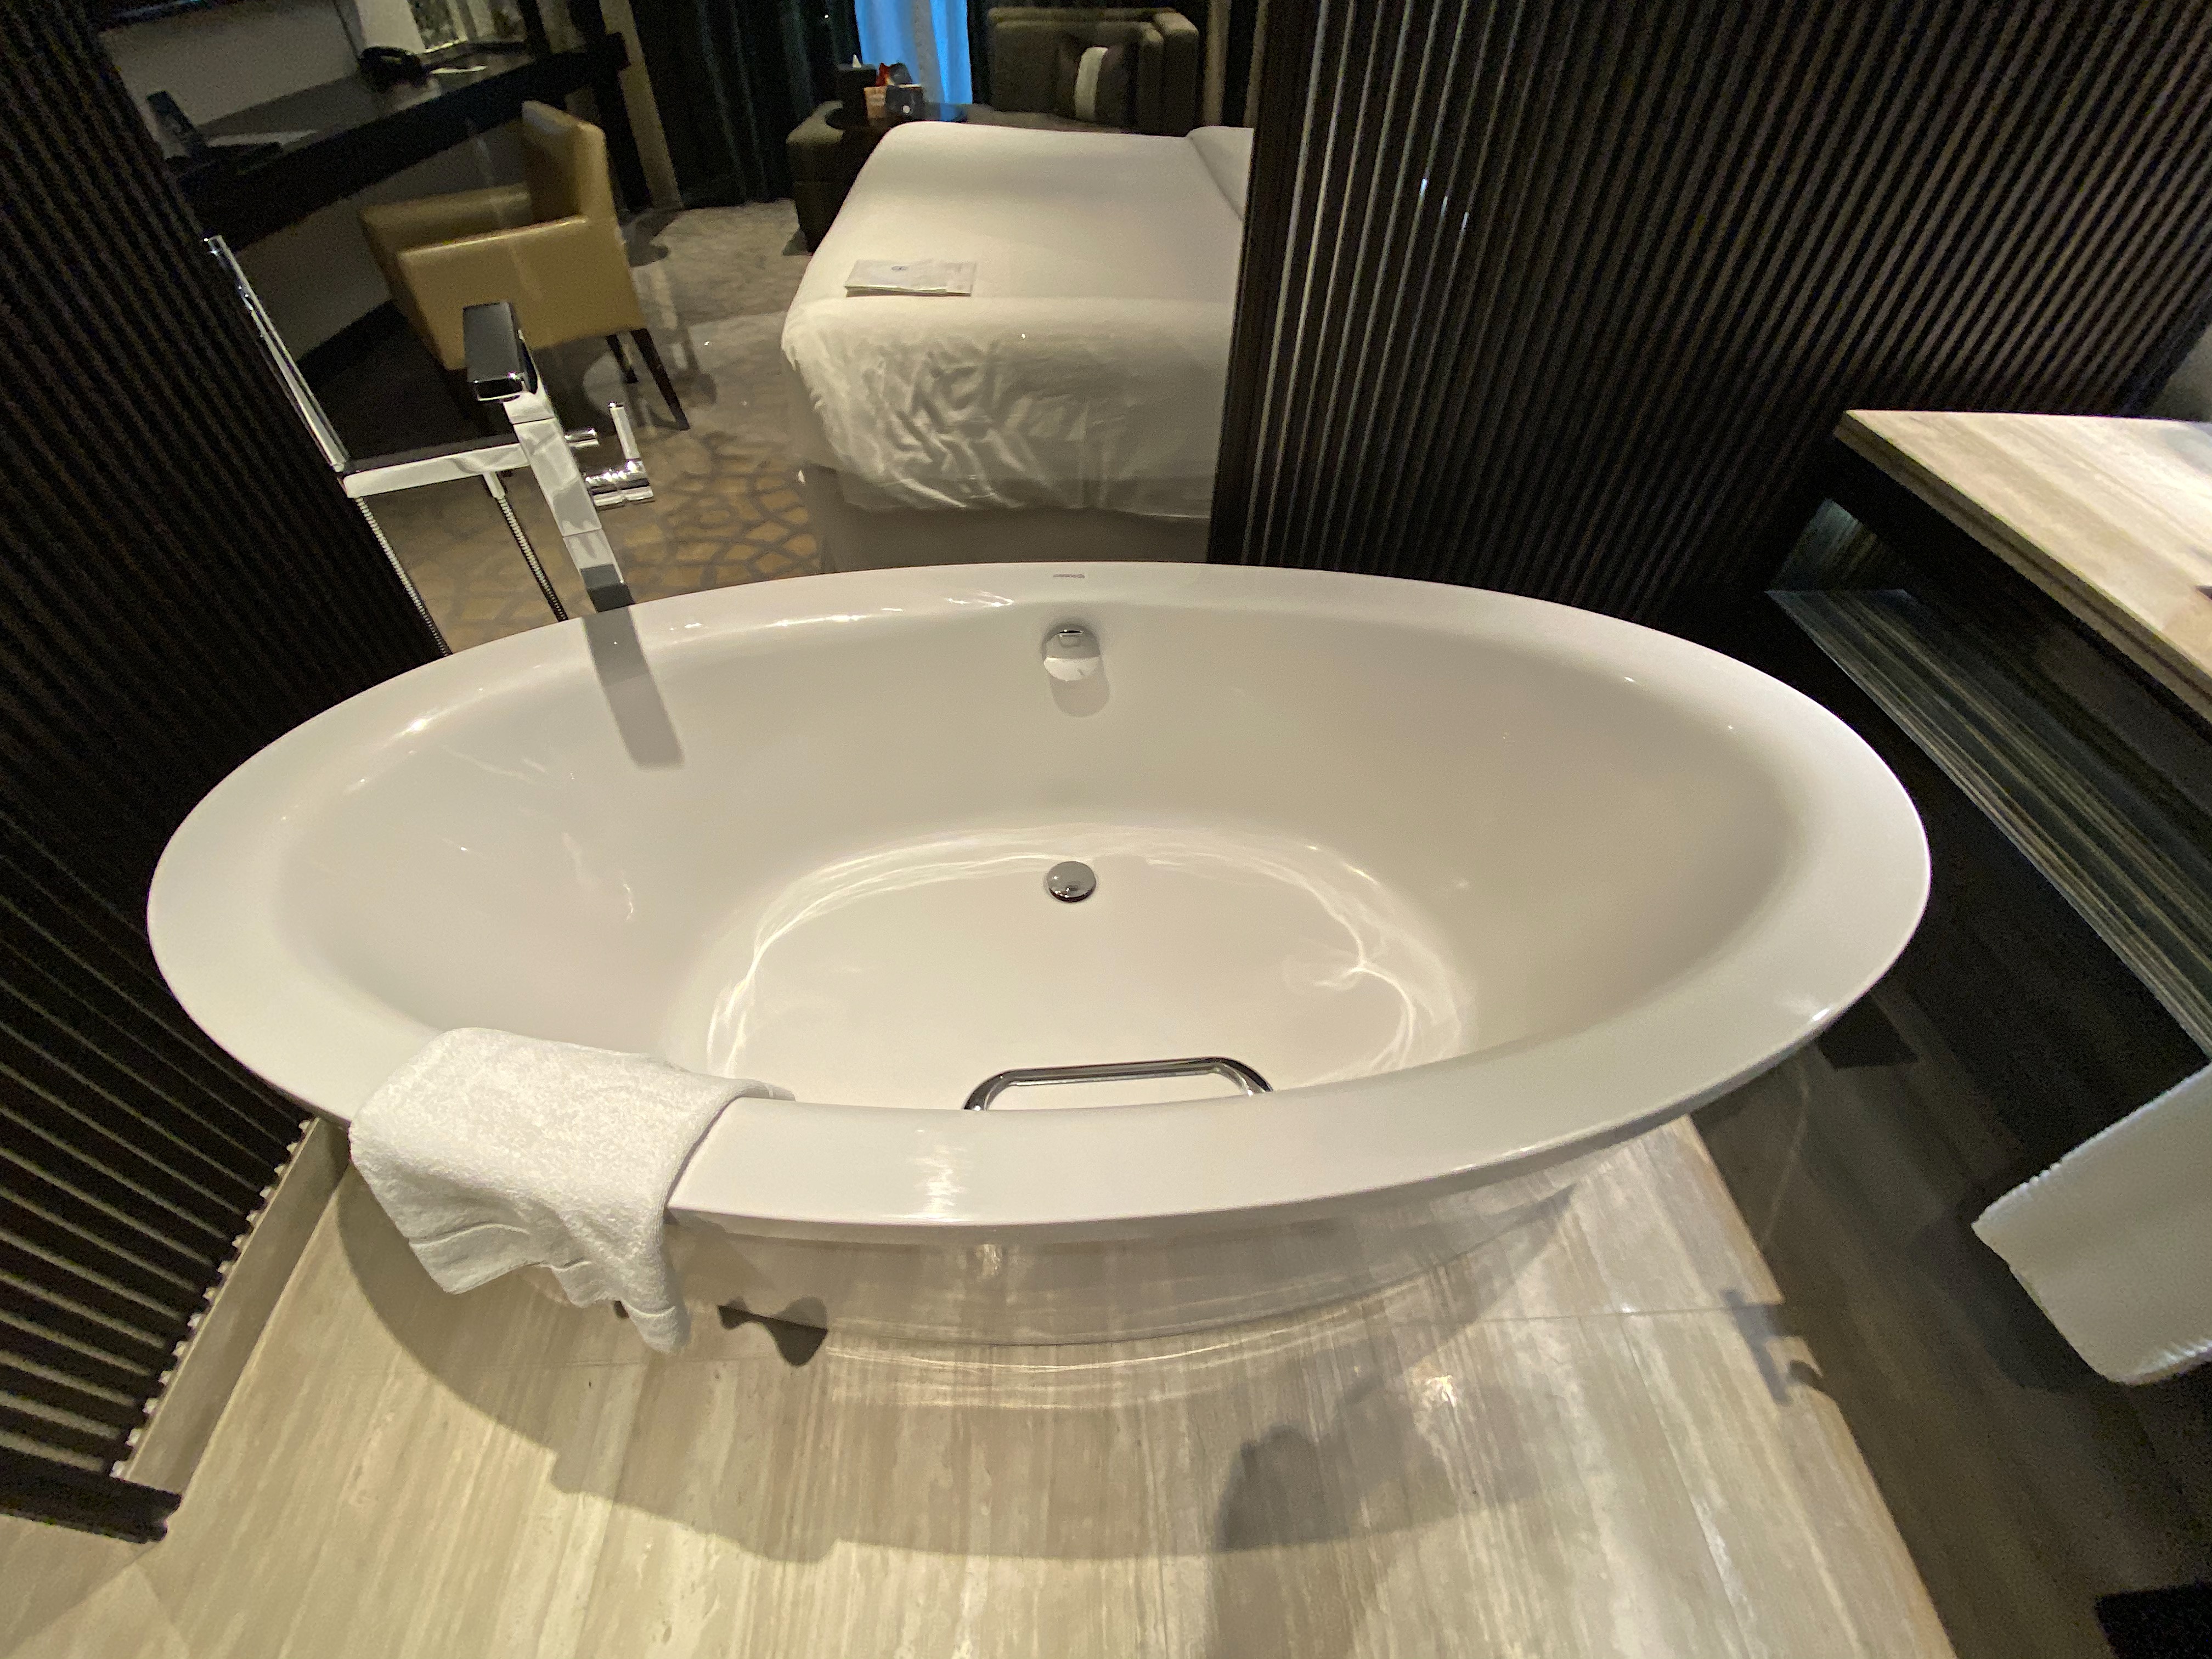 a white bathtub in a room